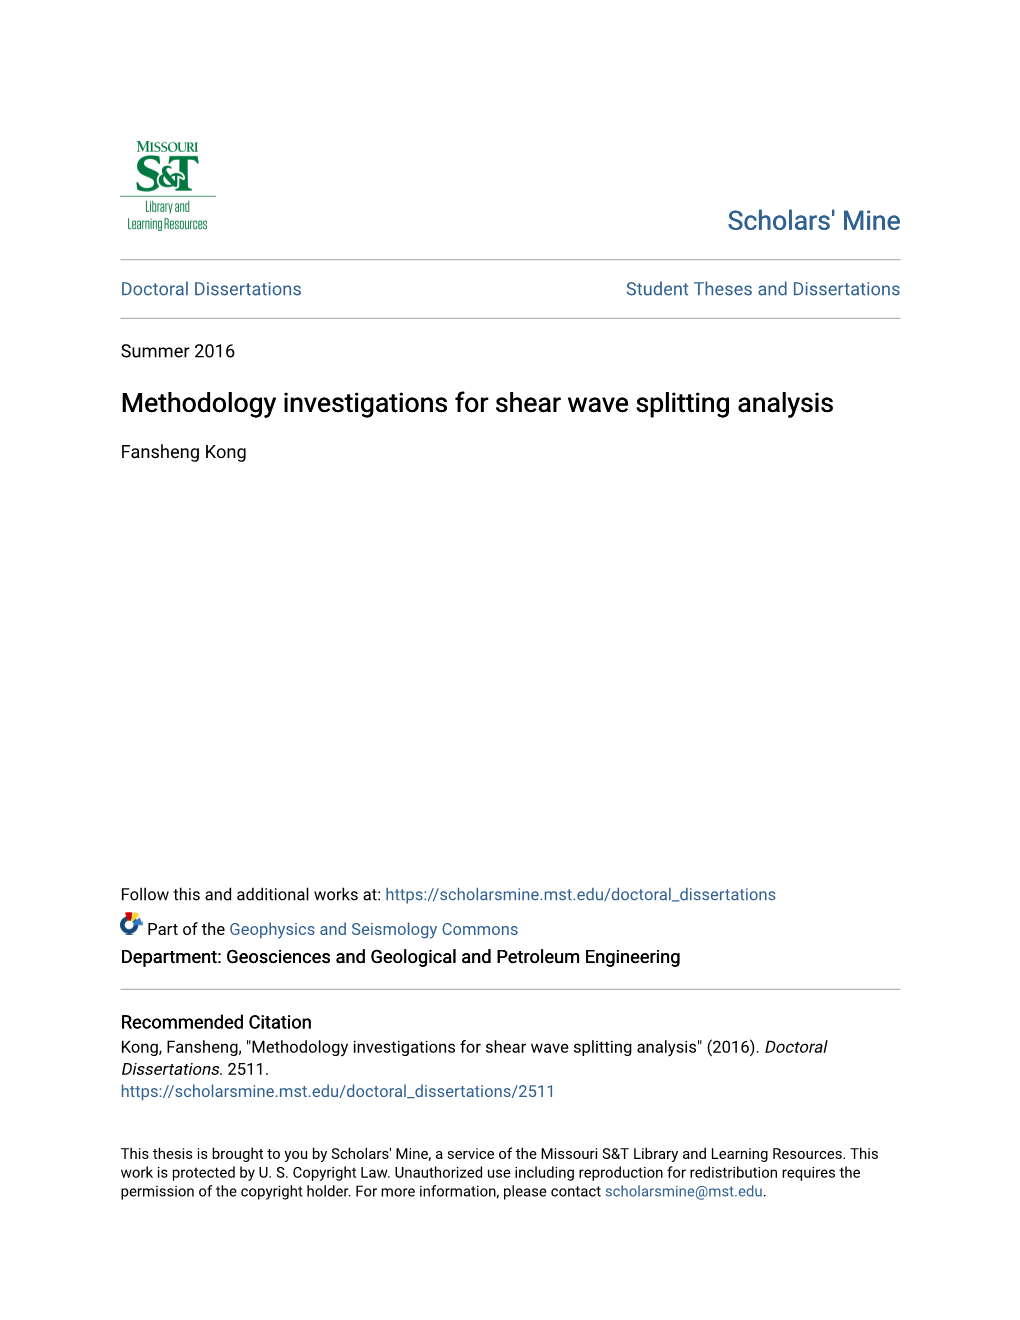 Methodology Investigations for Shear Wave Splitting Analysis